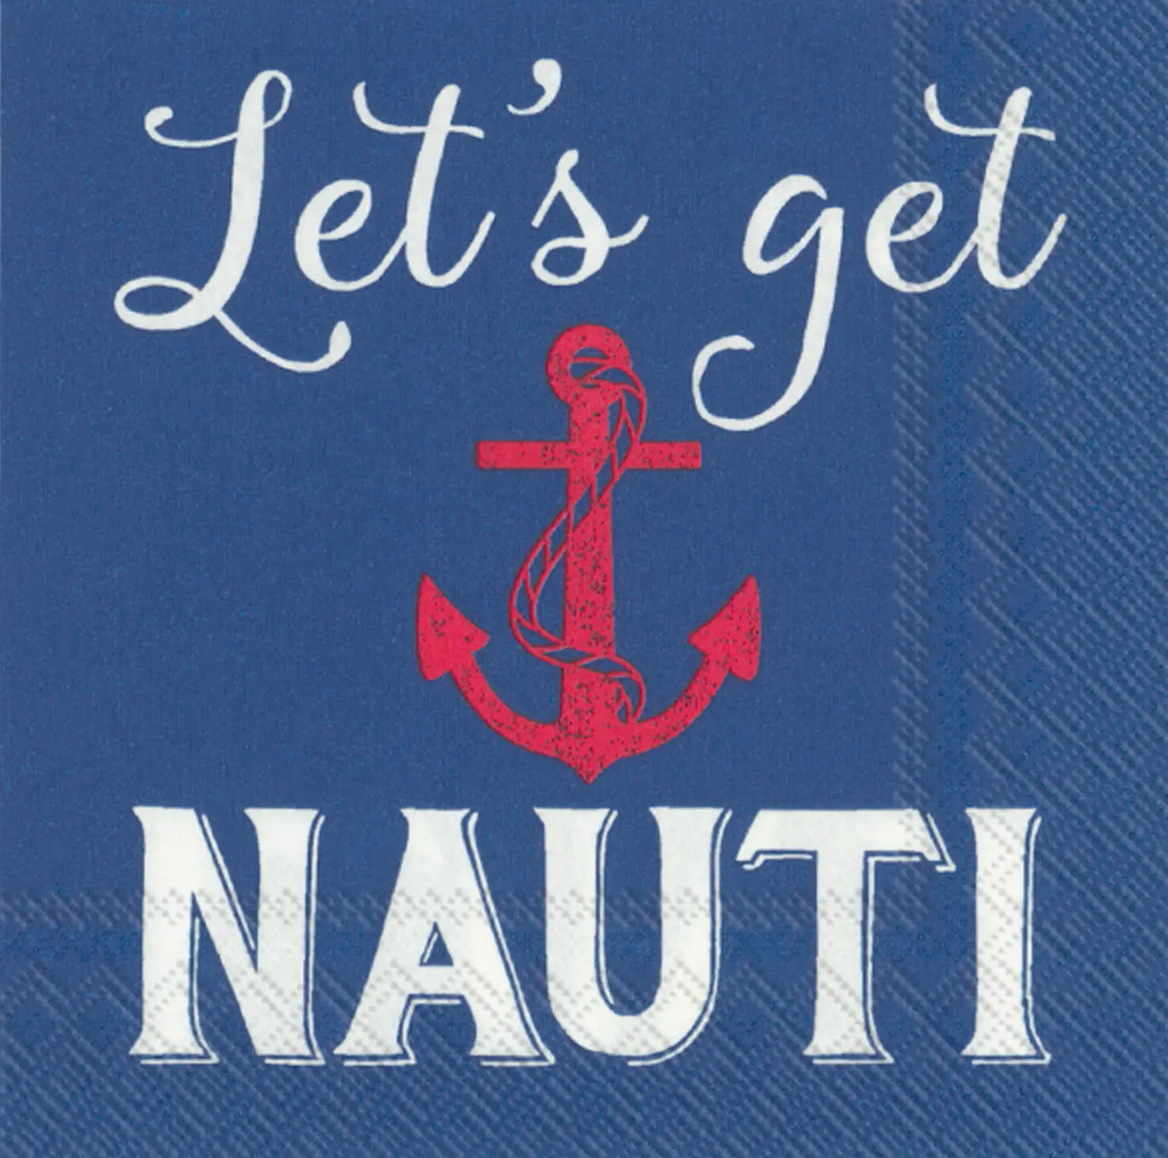 Cocktail Napkin - Let's Get Nauti